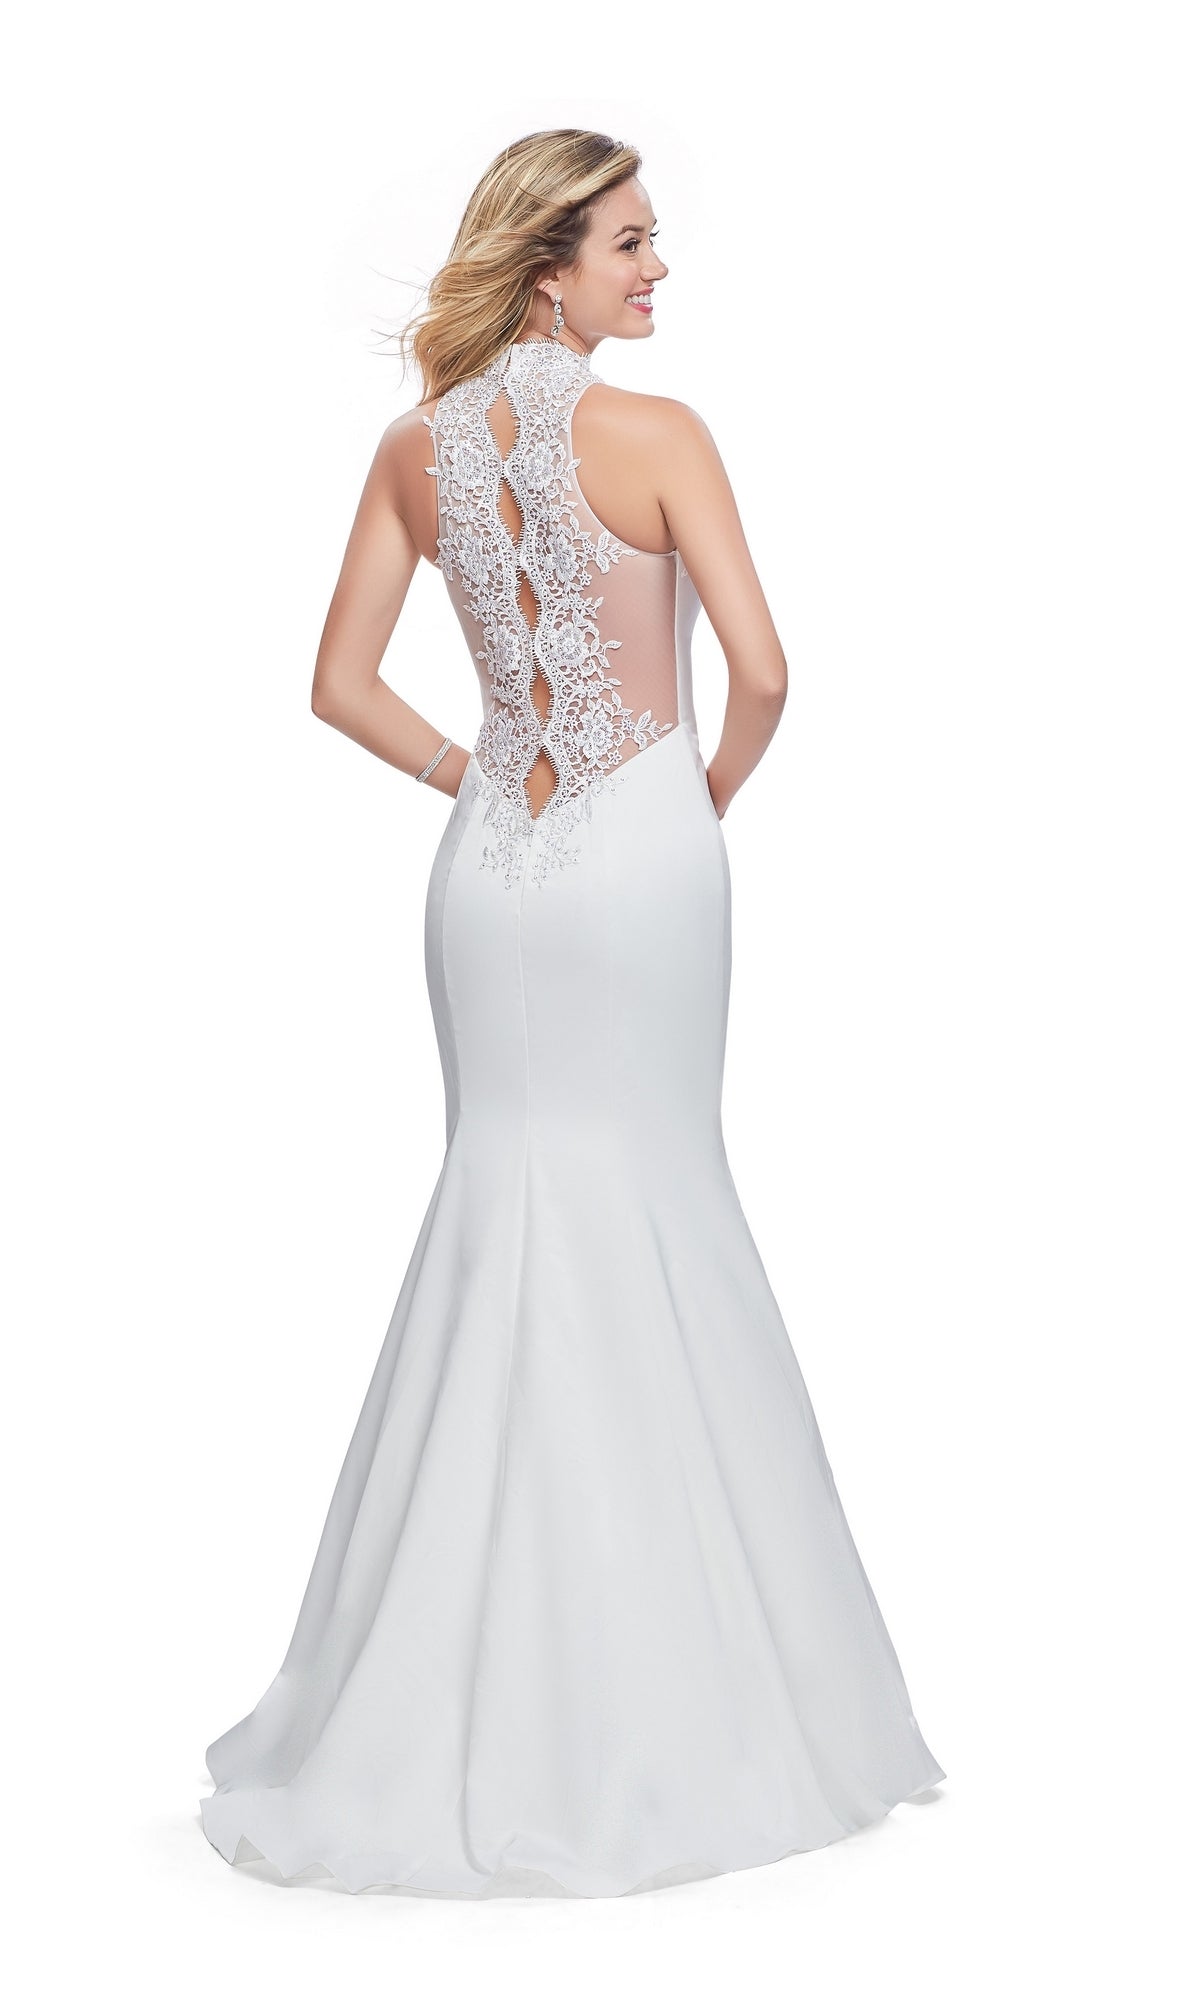 La Femme 25792 Long Prom Dress